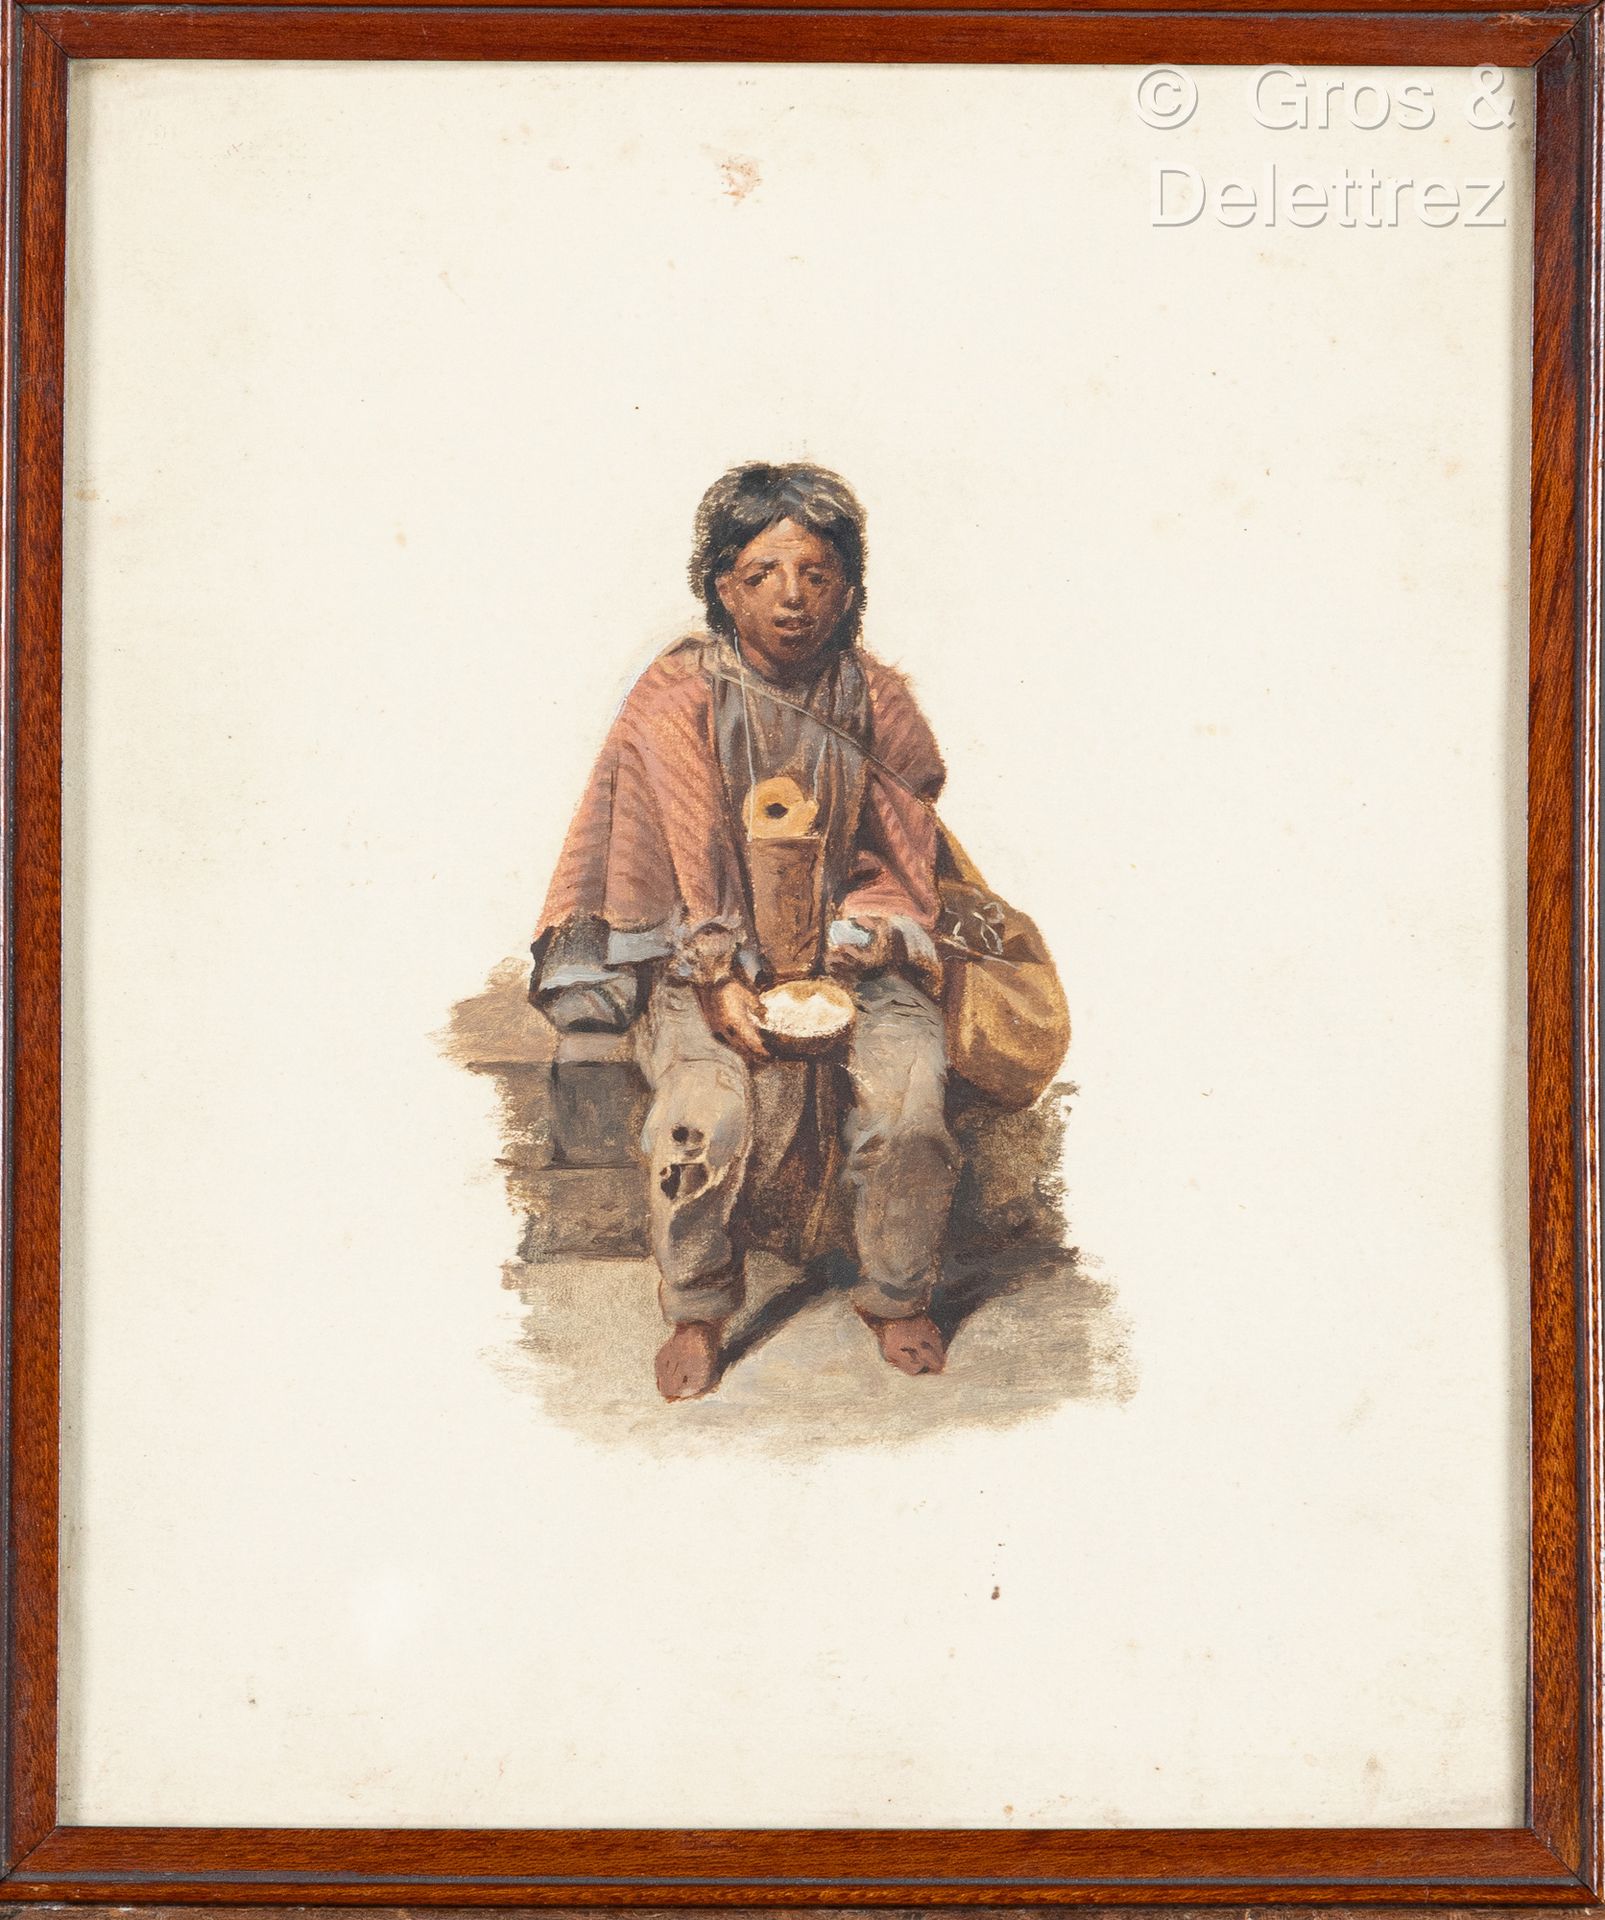 Null 华金-平托 (1842-1906)
年轻的乞丐
纸上水粉画
29 x 24 cm. 坑洞和彩色玻璃